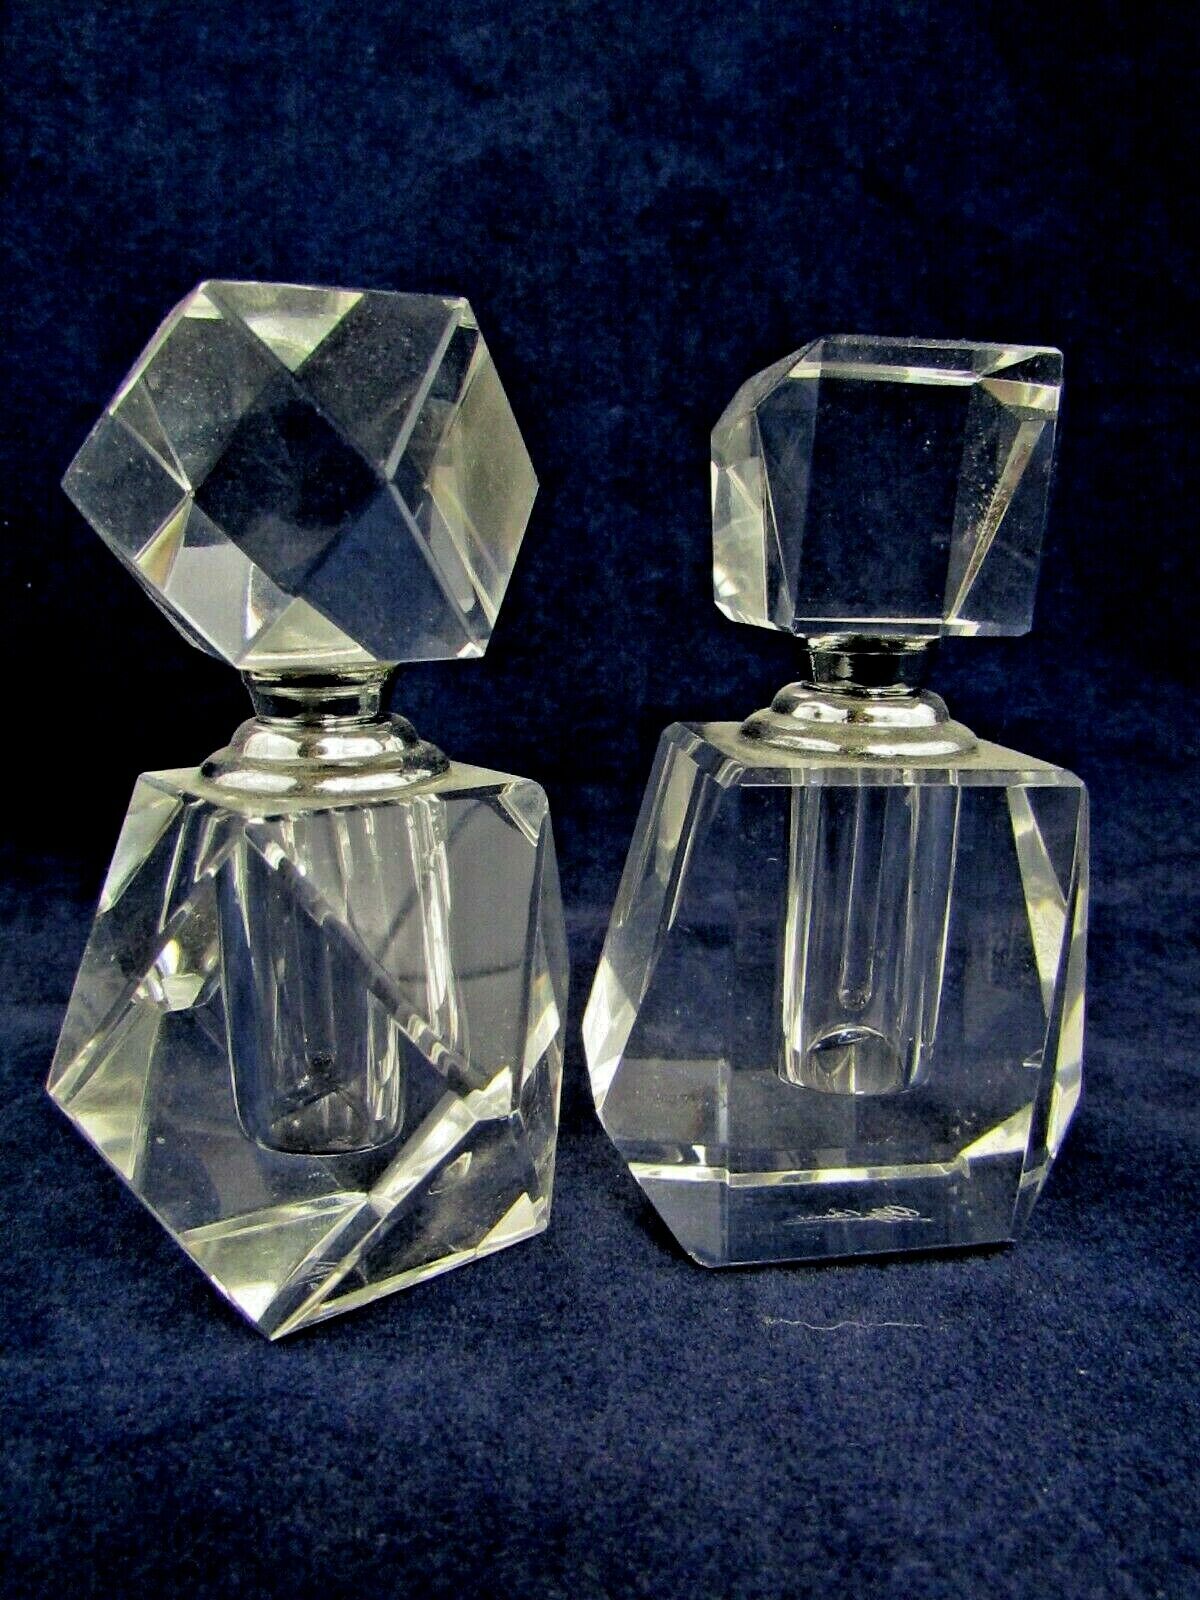 (2) Oleg Cassini Crystal Cut Perfume Bottles with Glass Daubers 